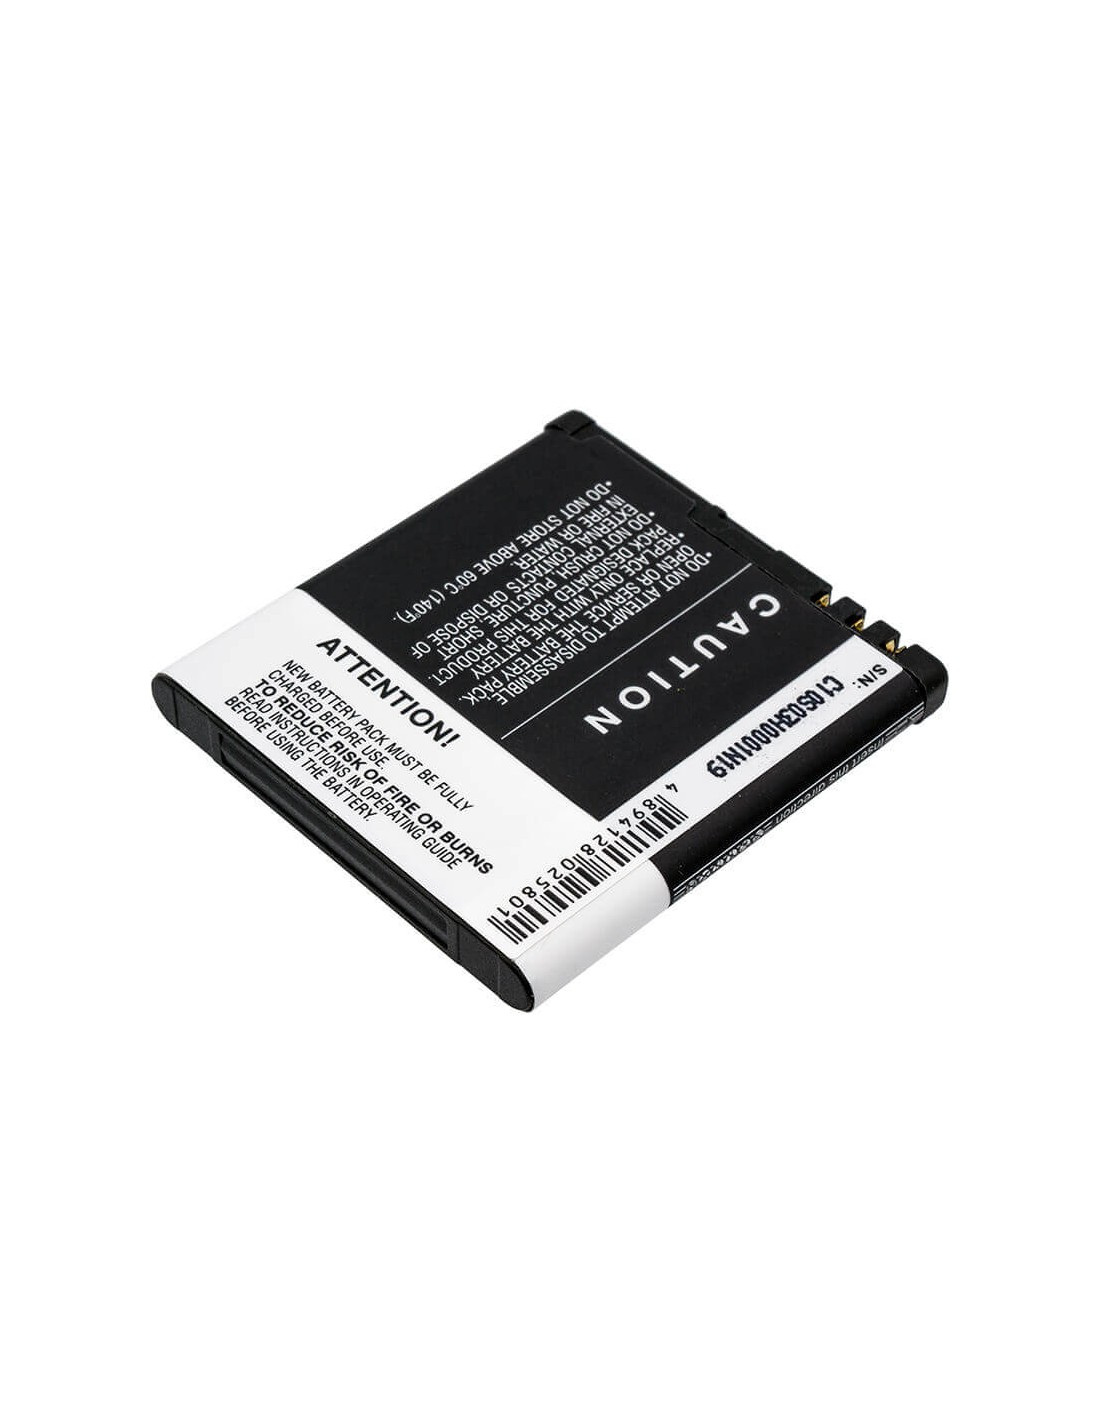 Battery for Nokia N85, N86, C7 3.7V, 1200mAh - 4.44Wh